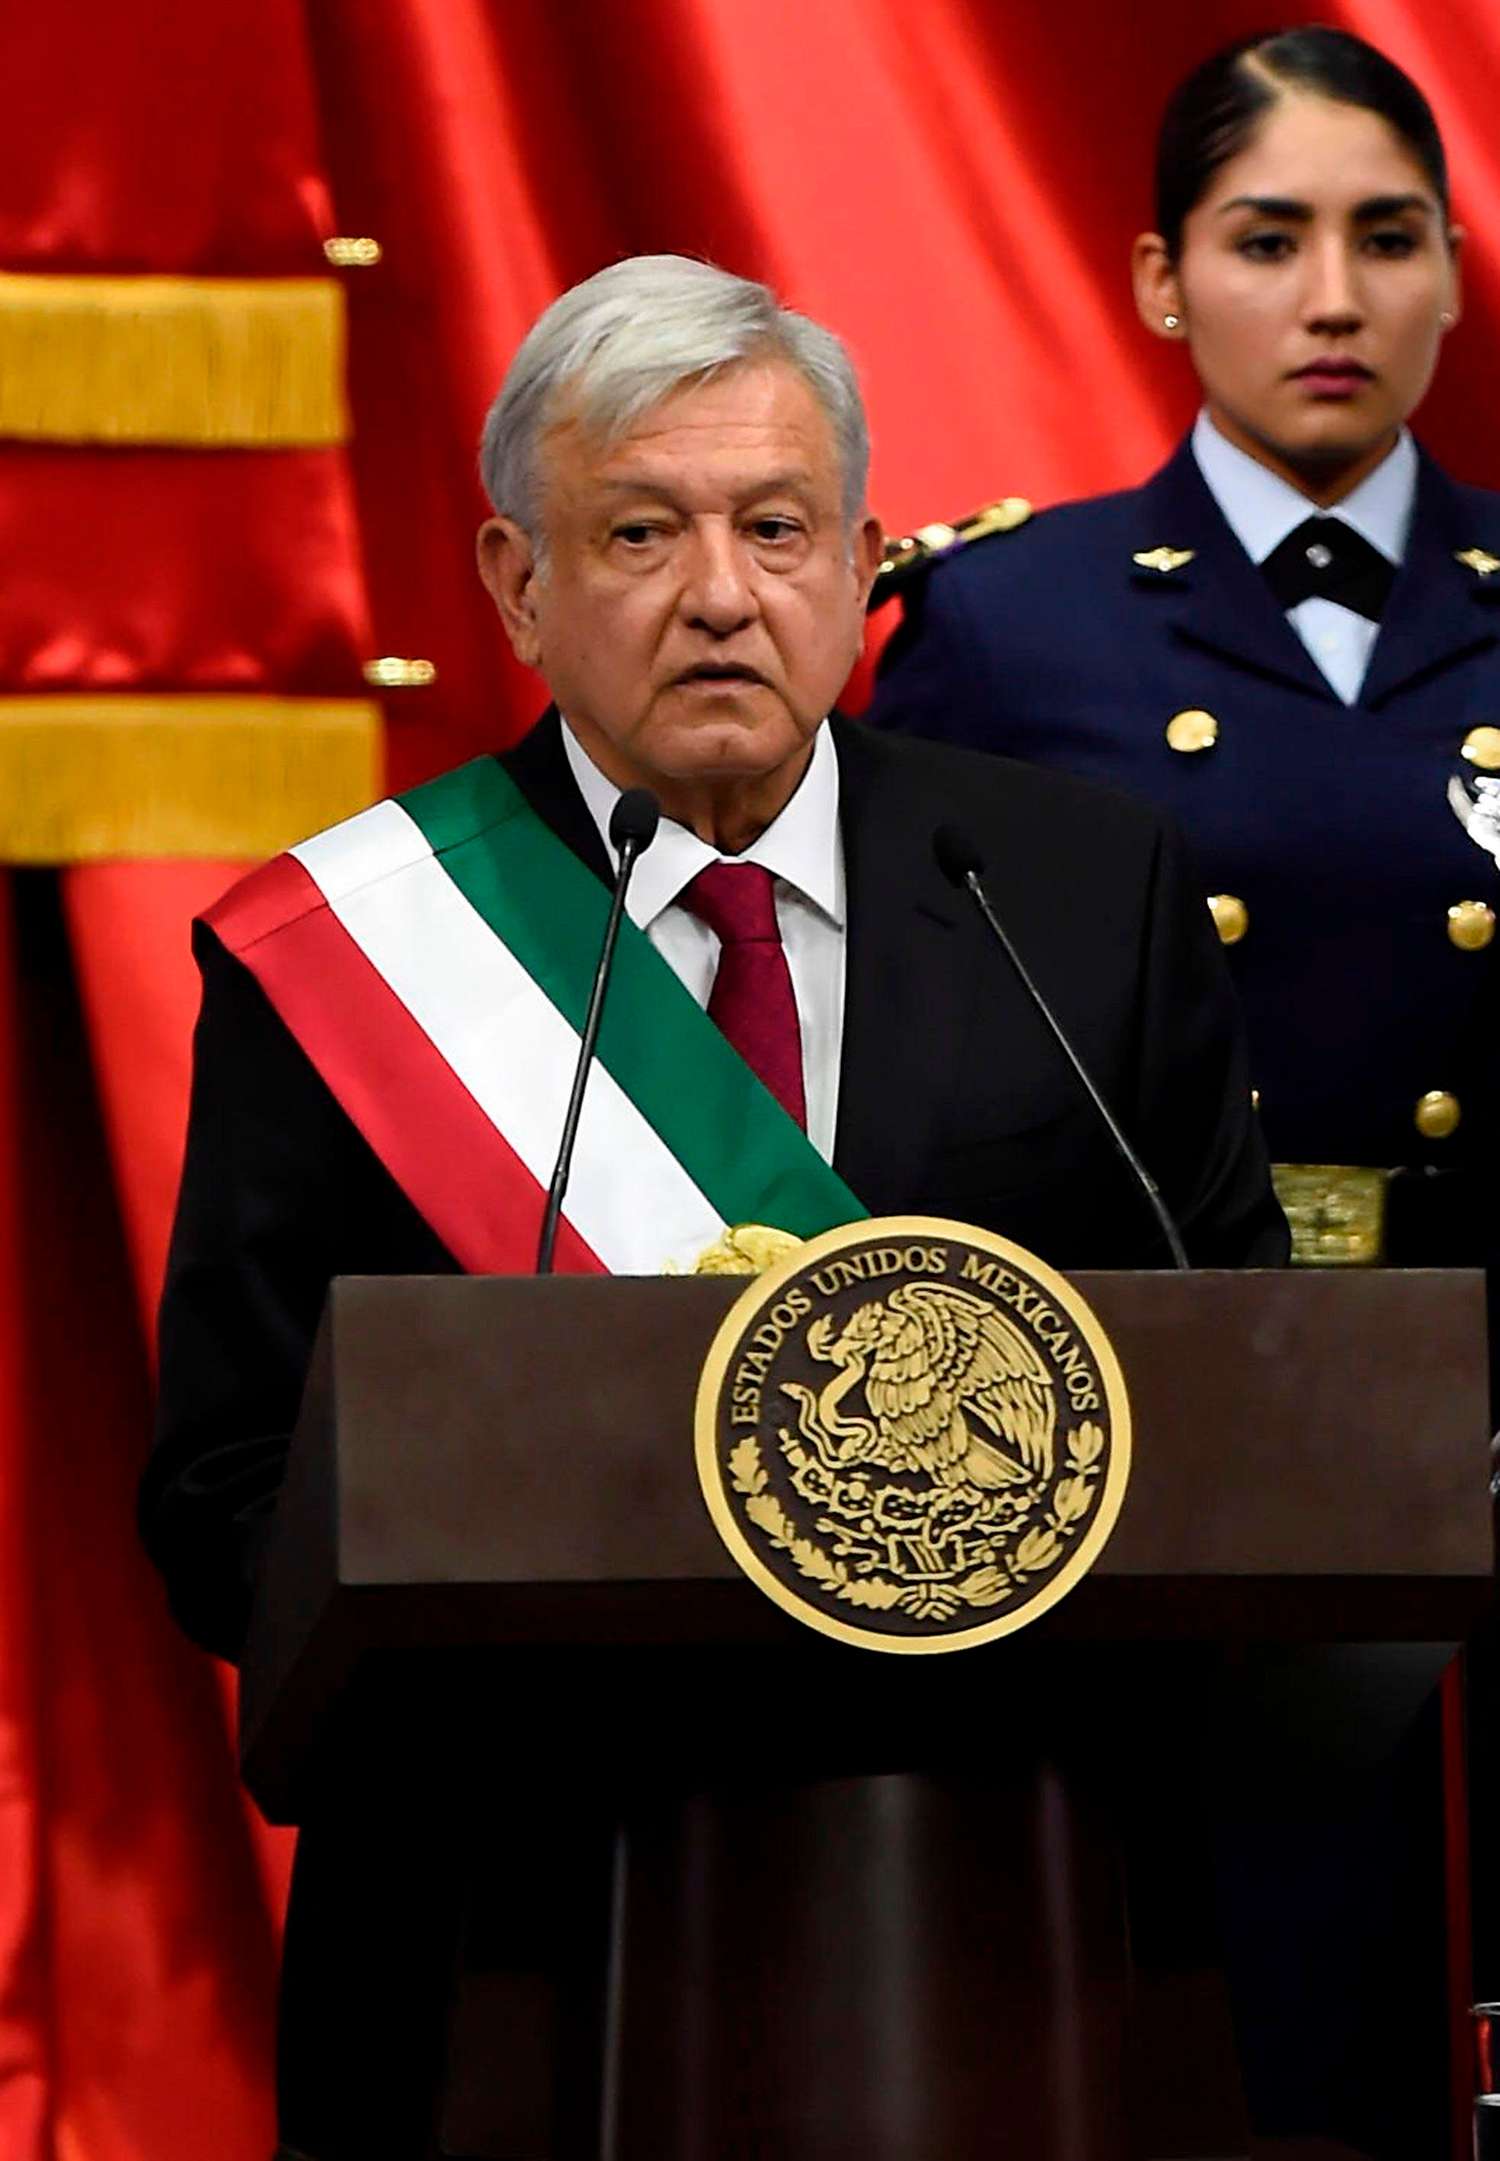 México inicia una histórica alternancia al asumir López Obrador como presidente